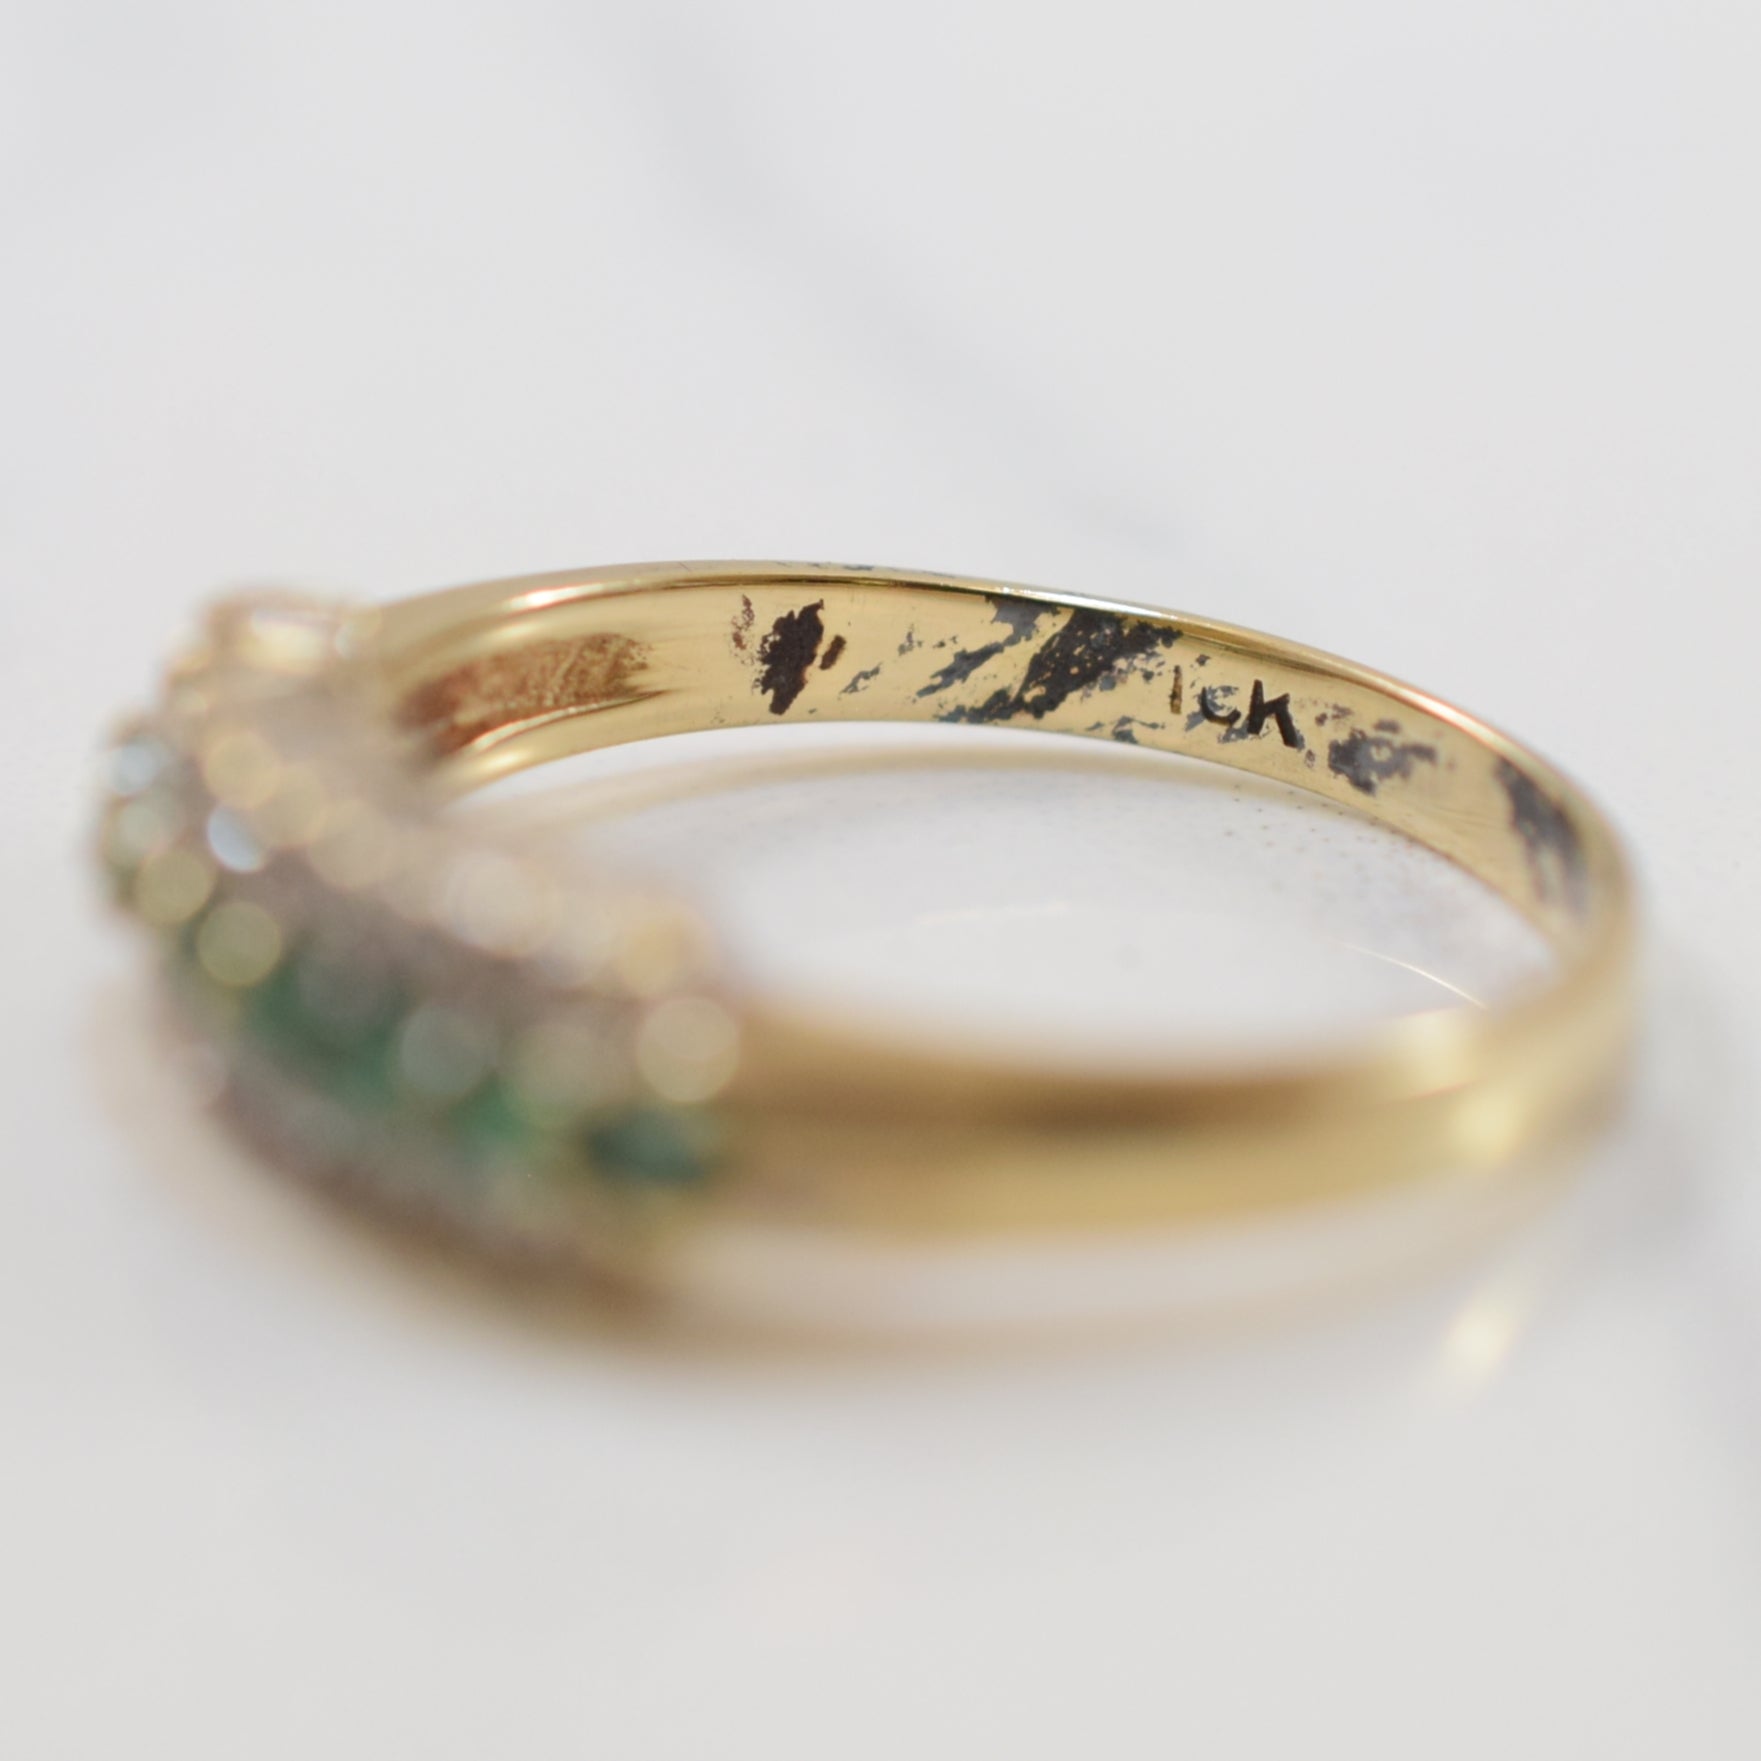 Triple Row Emerald & Diamond Ring | 0.20ctw, 0.10ctw | SZ 6.25 |